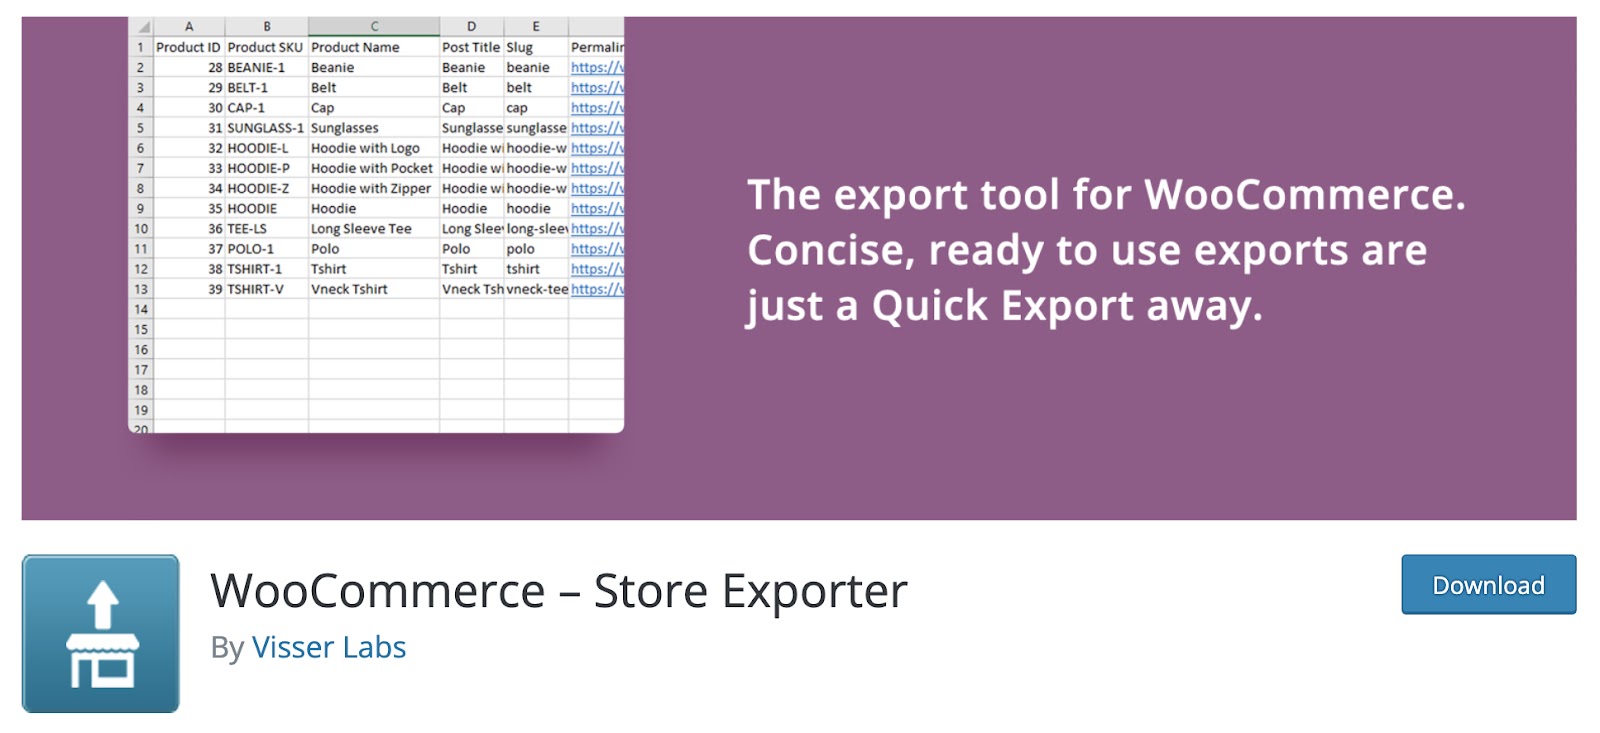 WooCommerce Product Export Plugin - Store Exporter